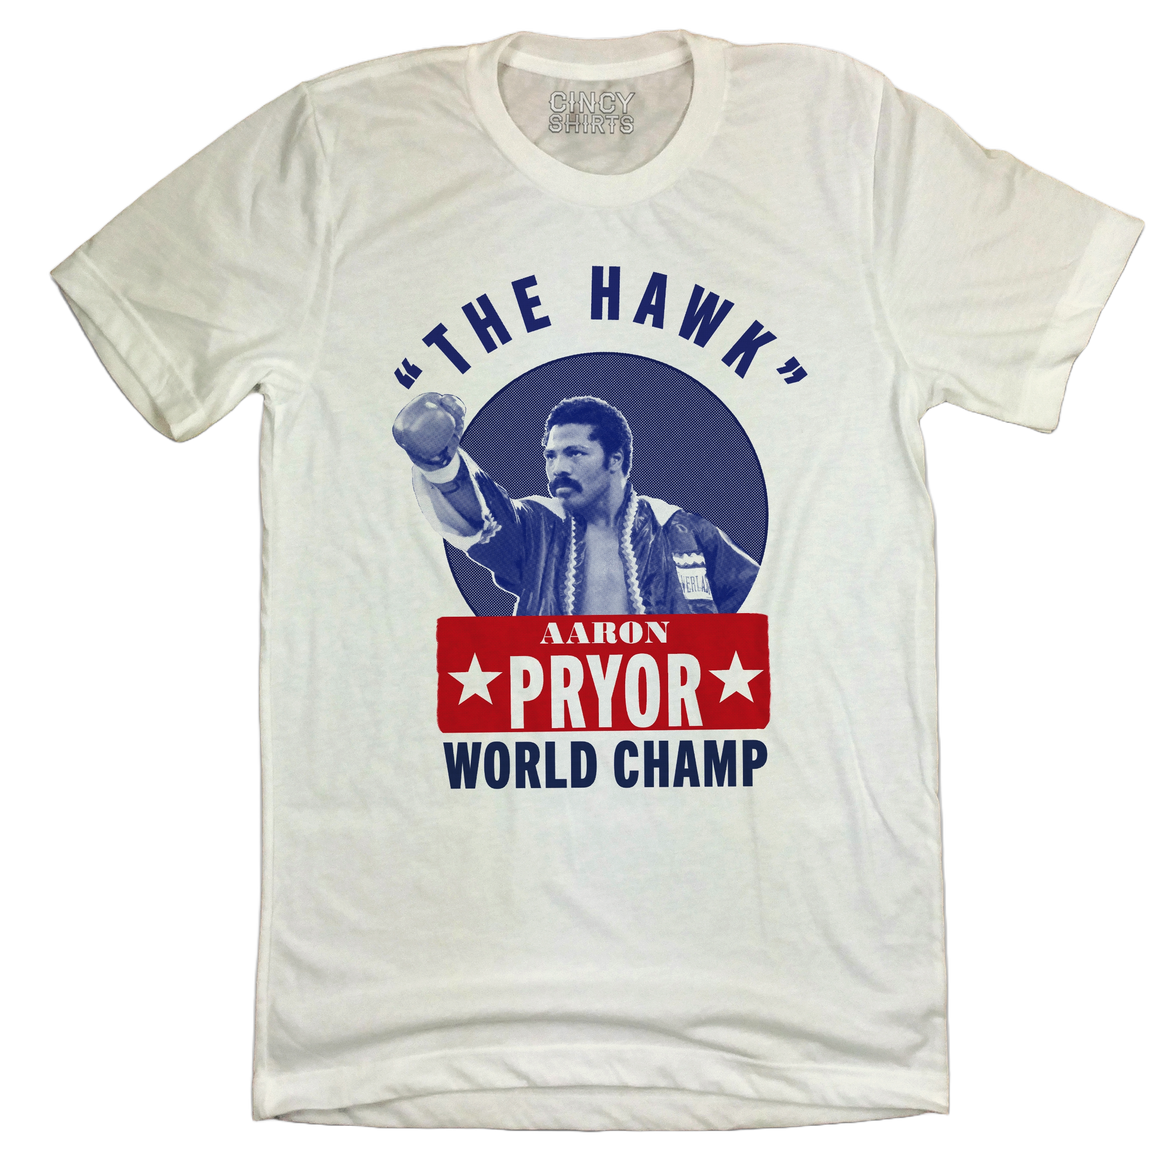 Aaron Pryor "The Hawk" World Champ - Cincy Shirts